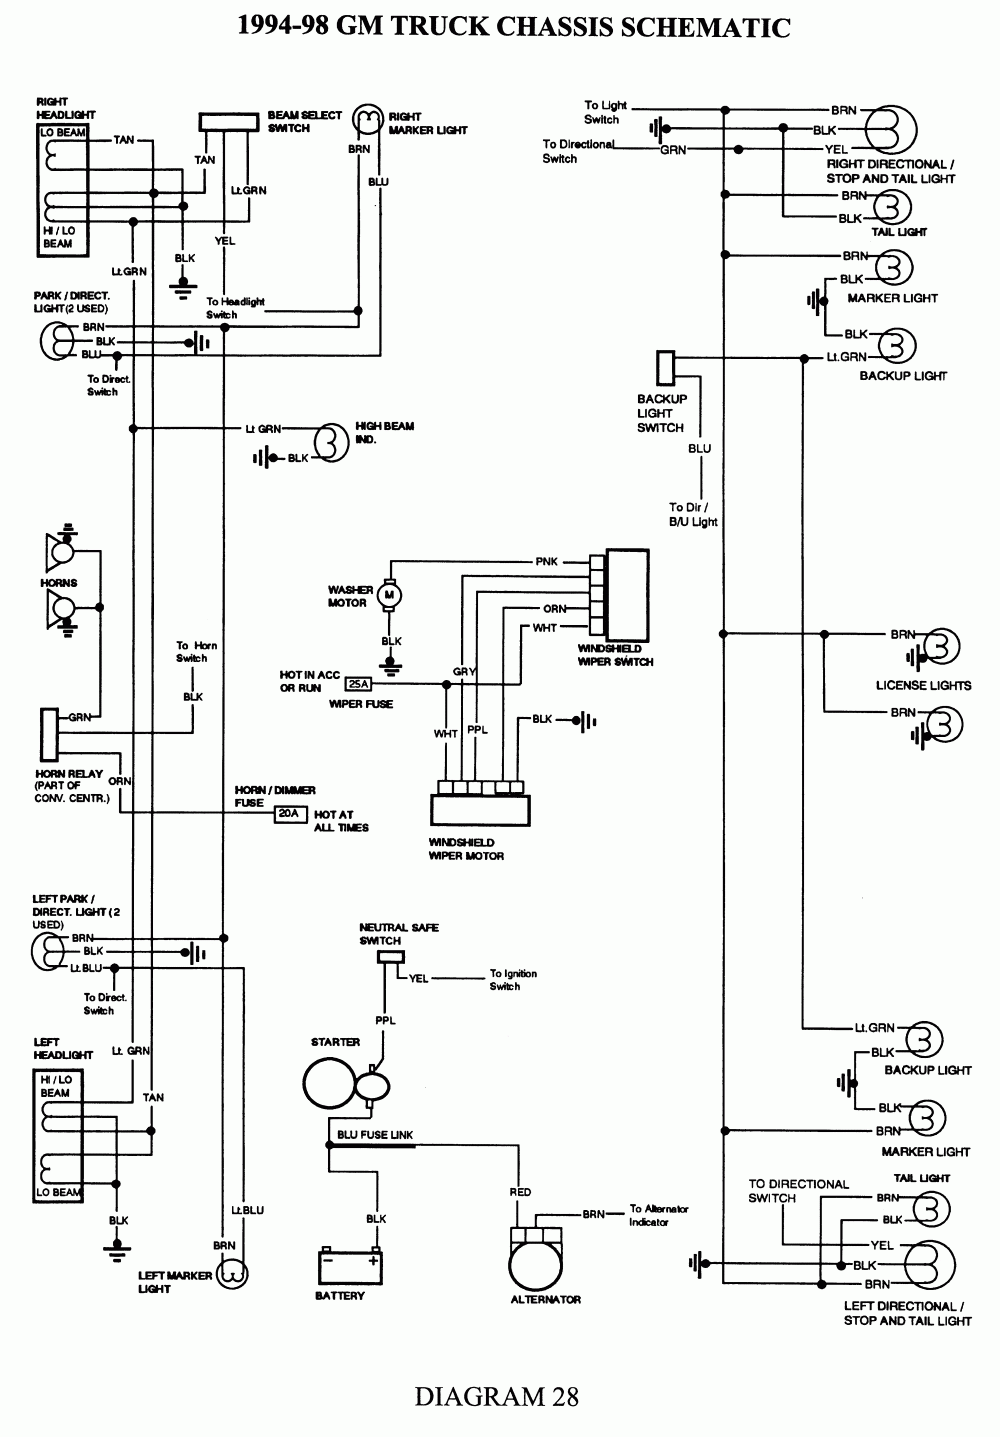 2000 Gmc Trailer Wiring Diagram